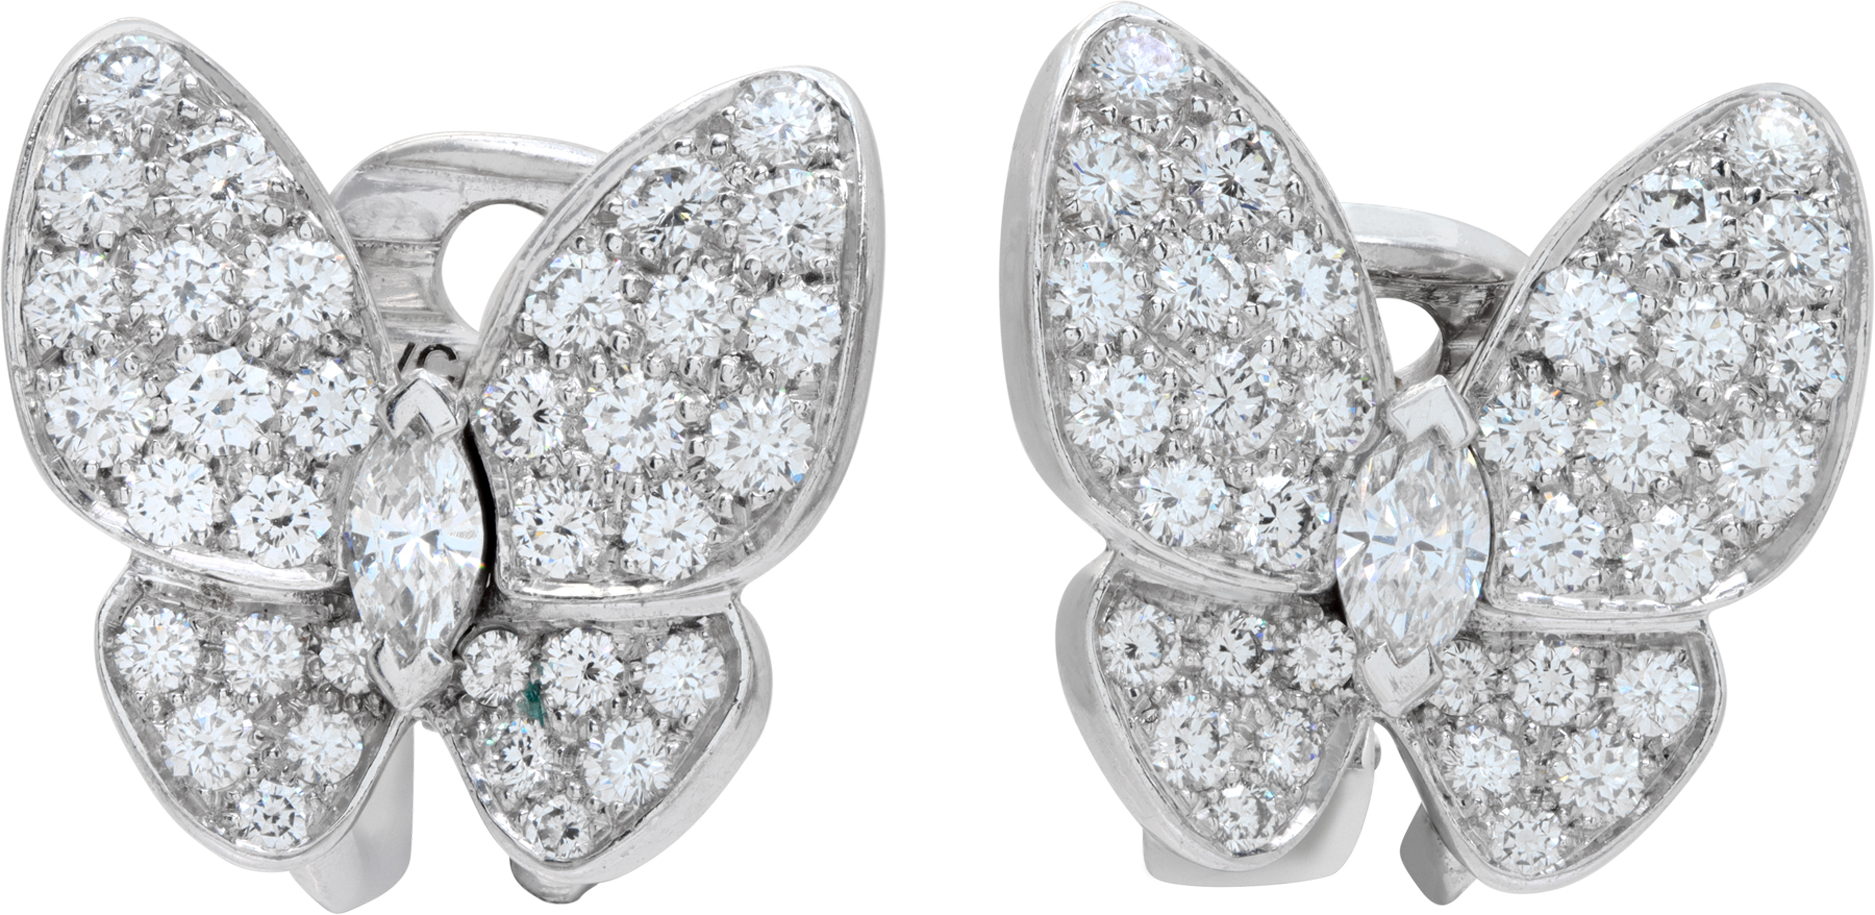 Van Cleef & Arpels Butterfly diamond earrings in 18k white gold